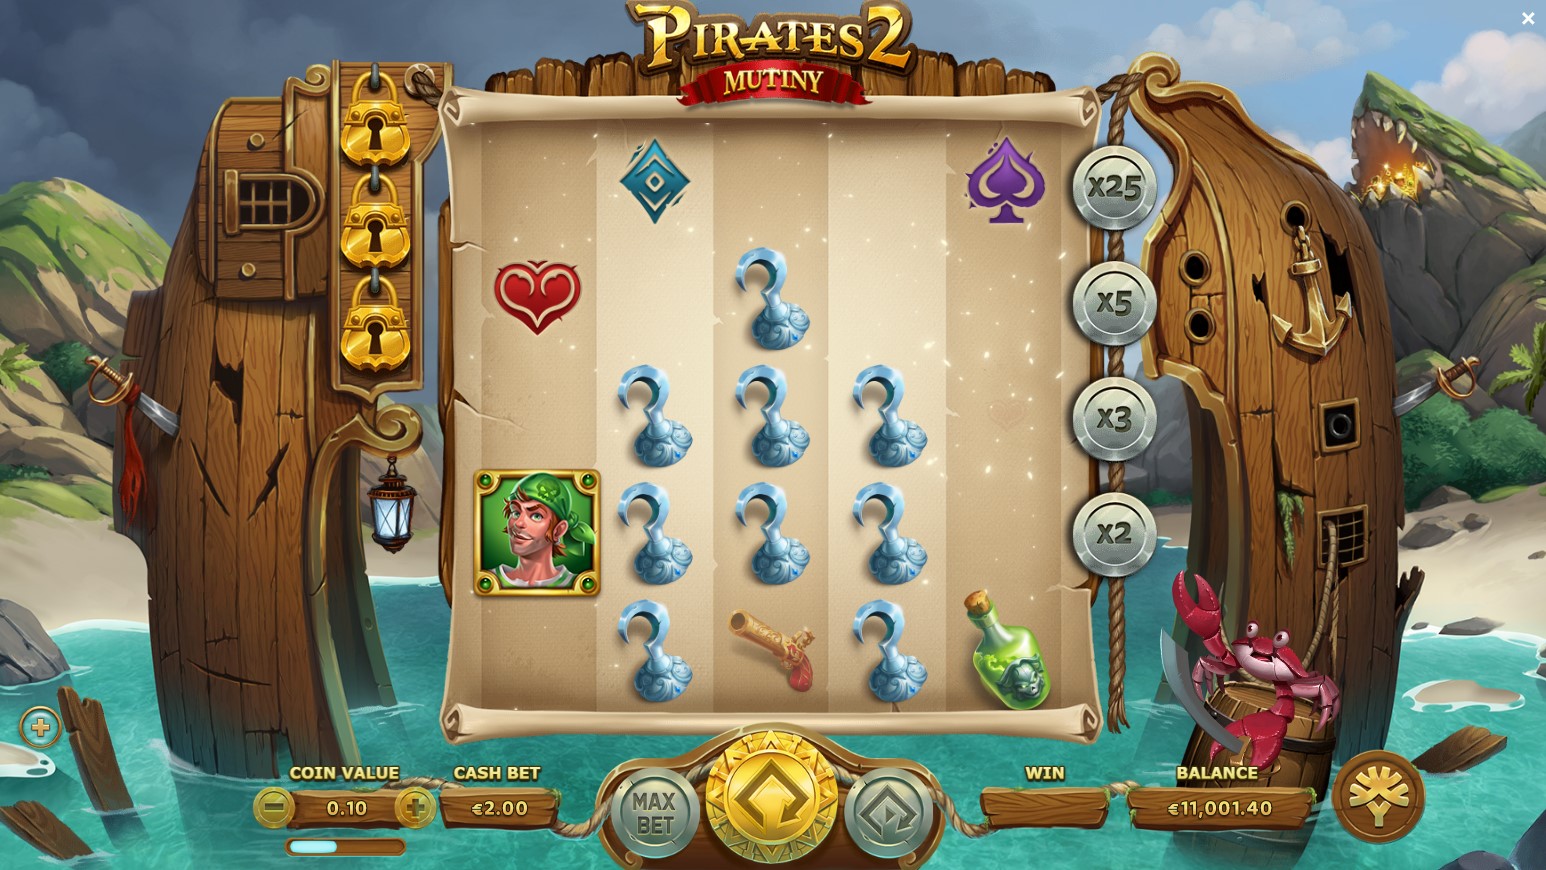 Pirates 2 Mutiny 4 Yggdrasil